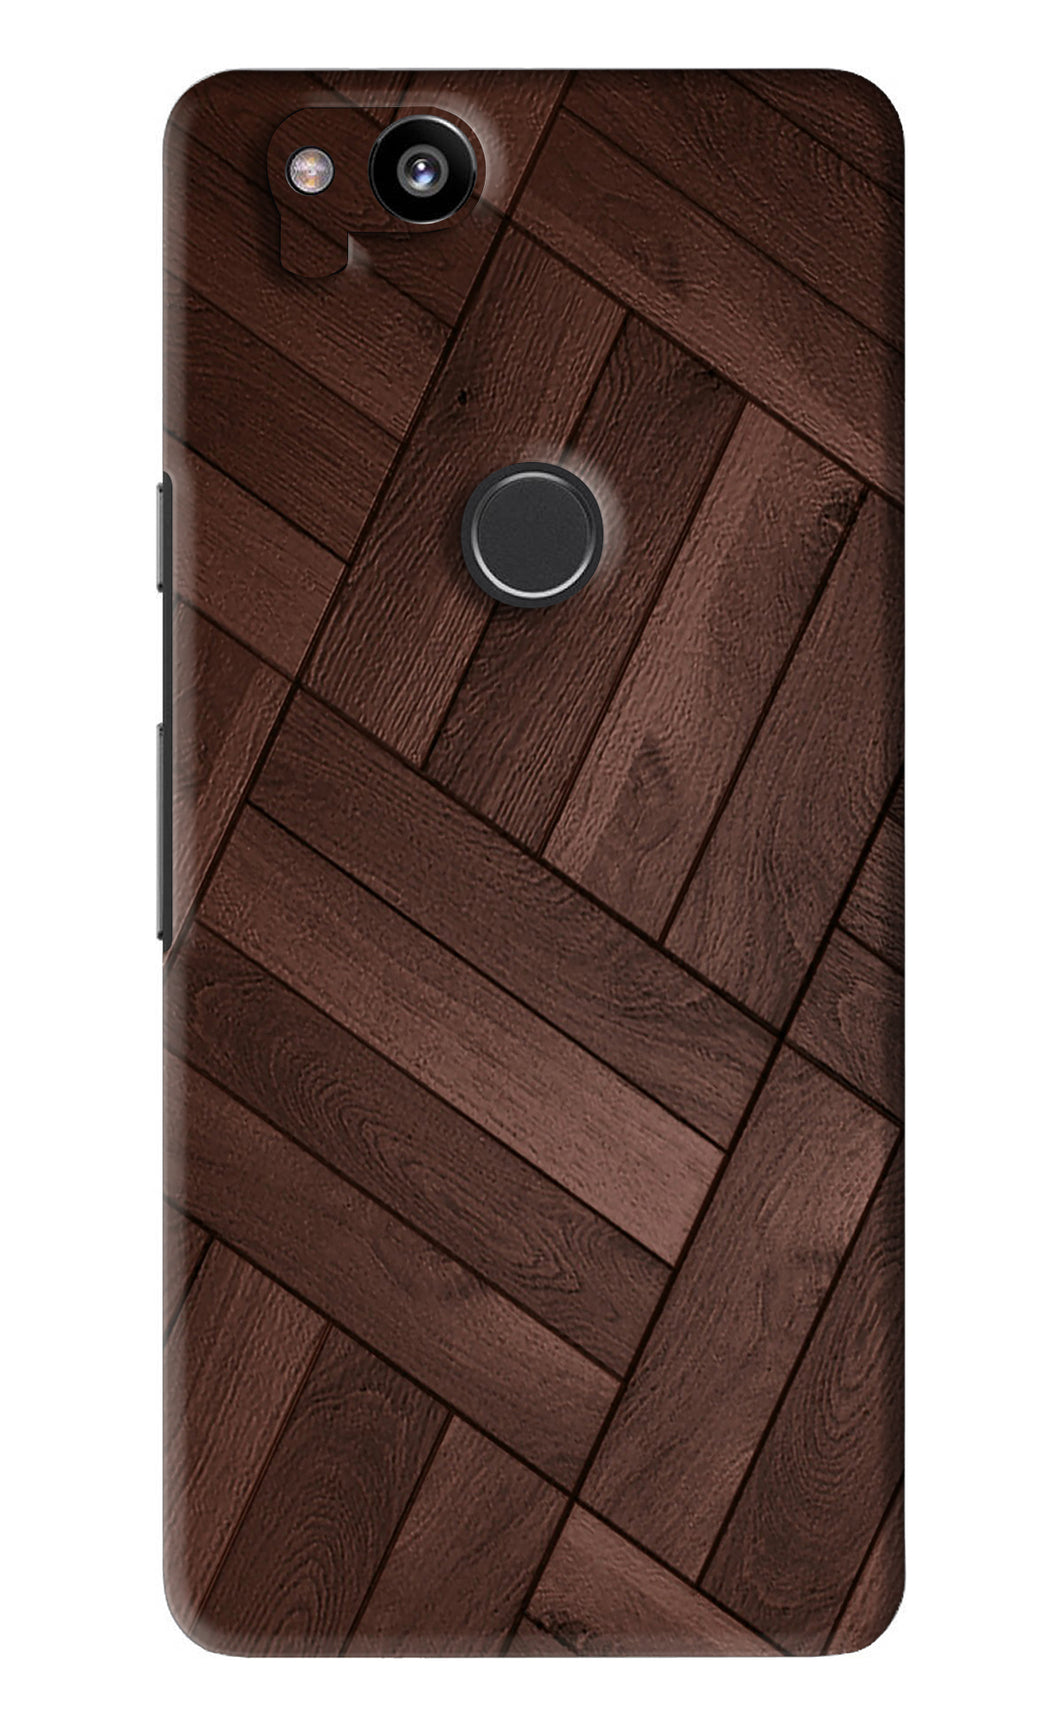 Wooden Texture Design Google Pixel 2 Back Skin Wrap